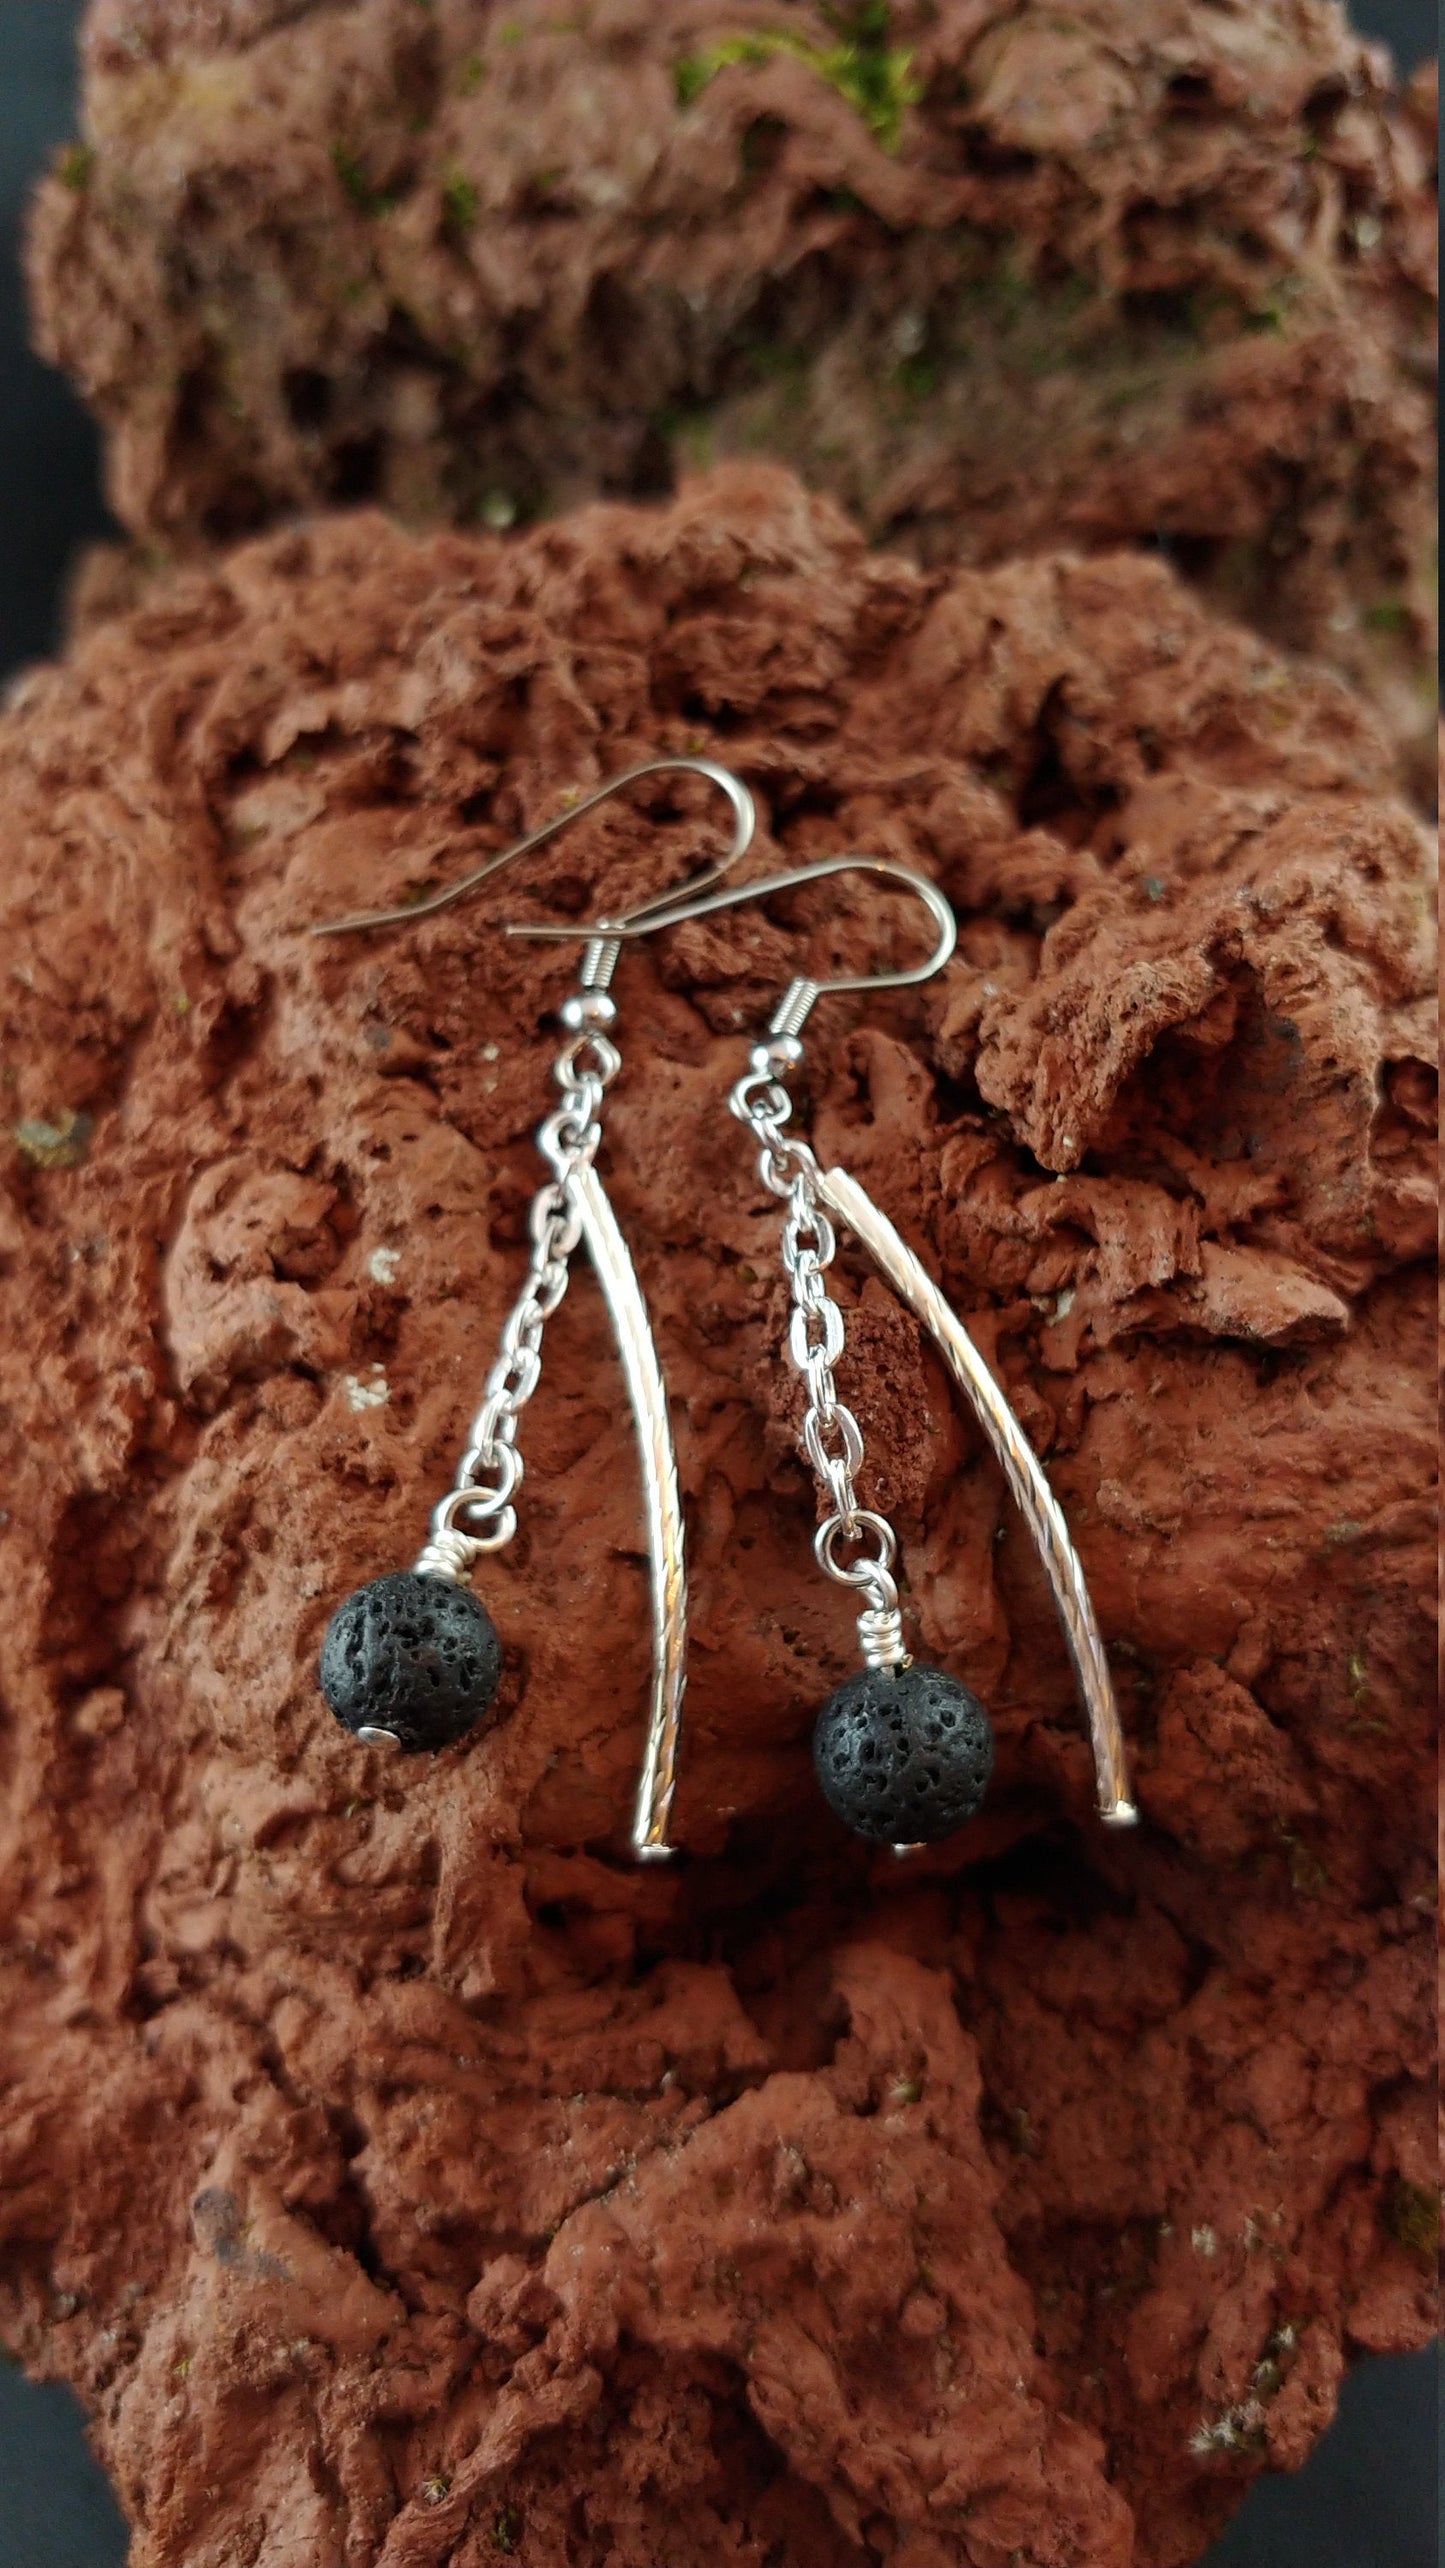 Chain Lava Earrings - Powerful Chain Earrings Handmade in Iceland